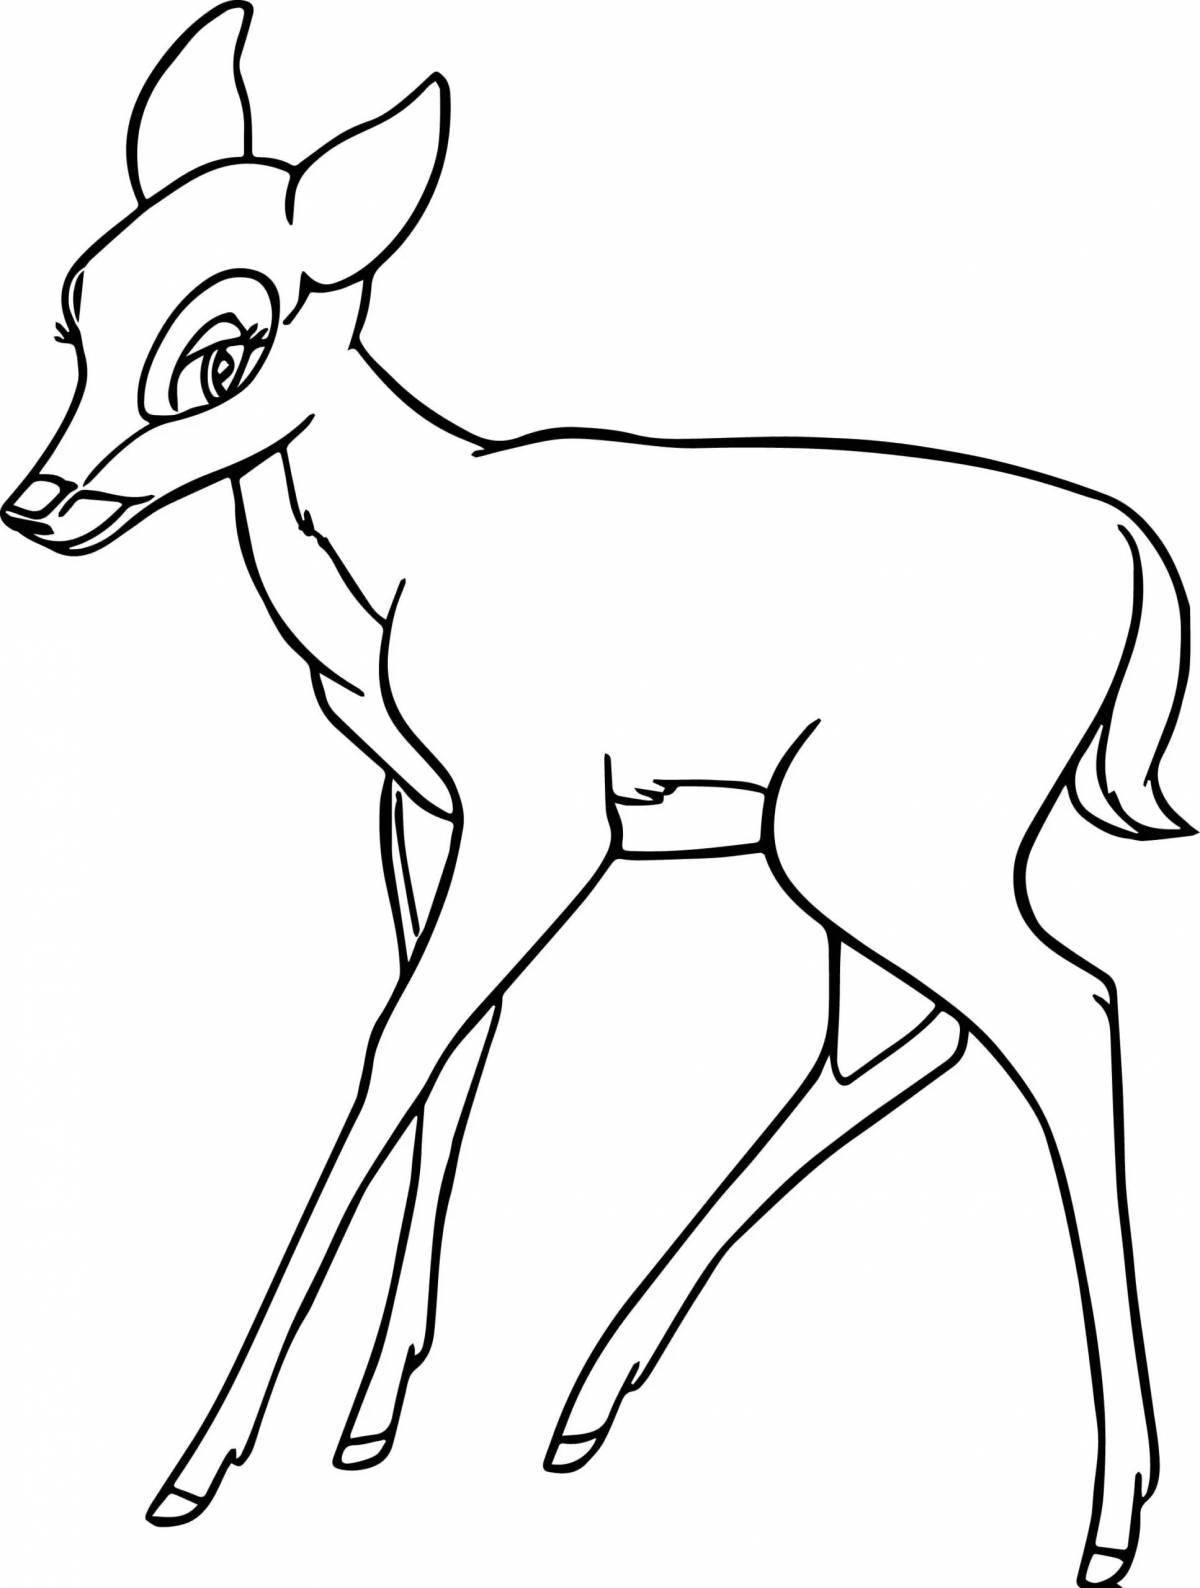 Coloring book funny roe deer for preschoolers